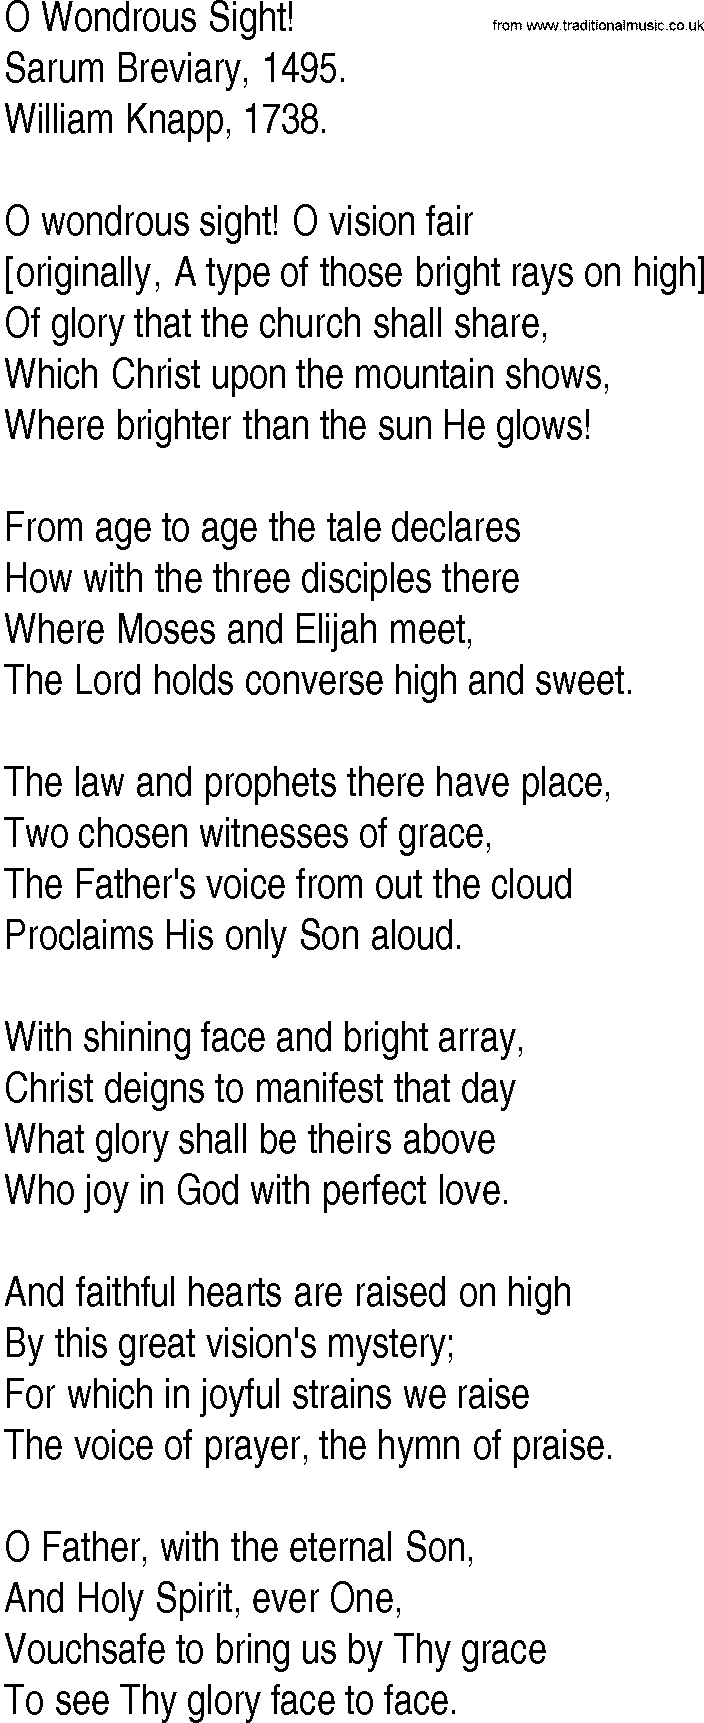 Hymn and Gospel Song: O Wondrous Sight! by Sarum Breviary lyrics